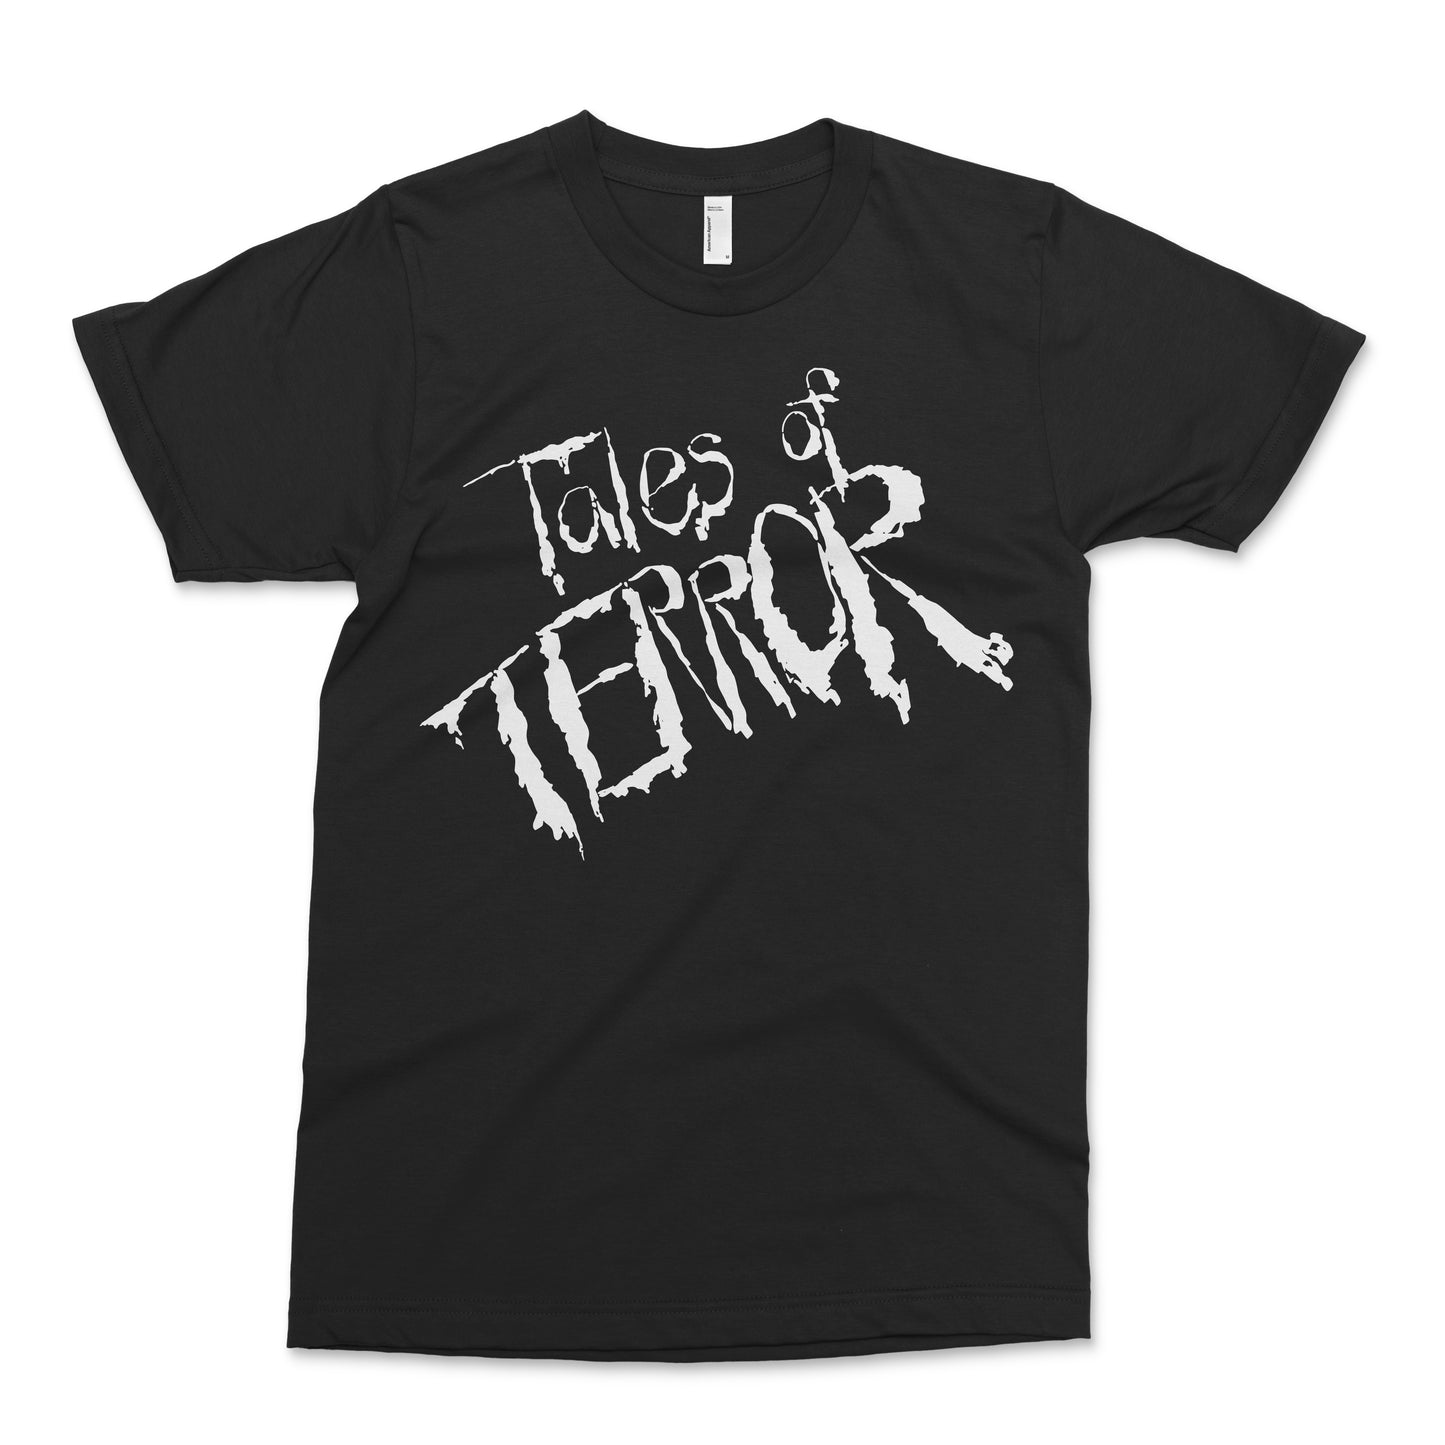 Tales of Terror - Black Logo Tee